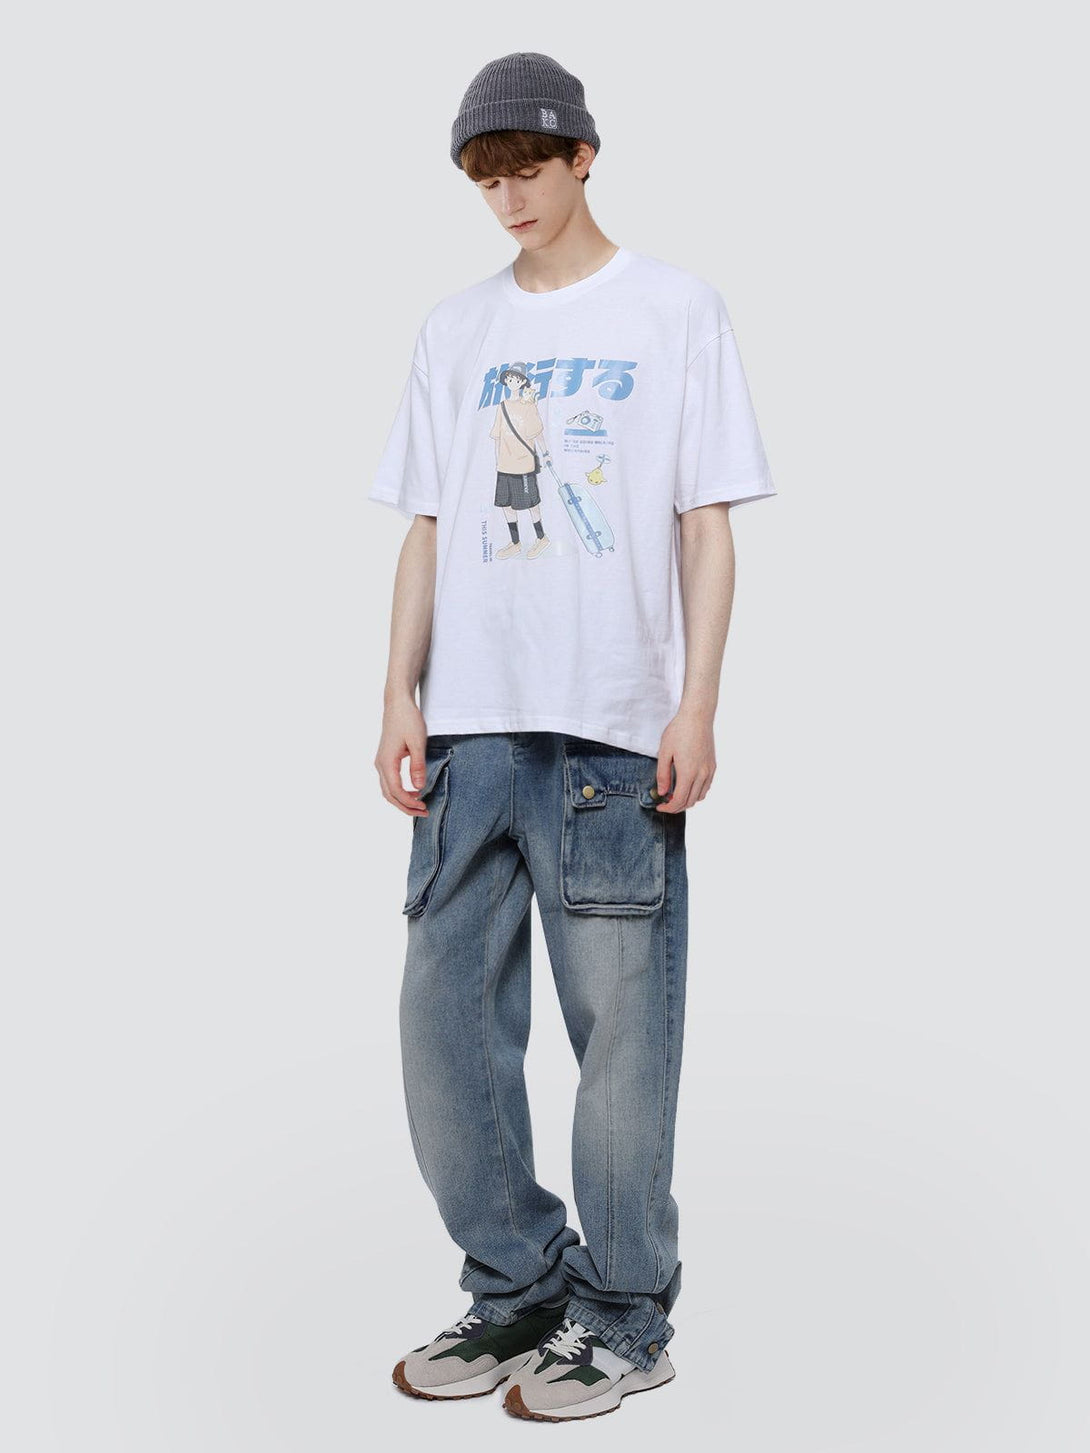 Majesda® - Japanese Anime Travel Boy Print Cotton Tee- Outfit Ideas - Streetwear Fashion - majesda.com